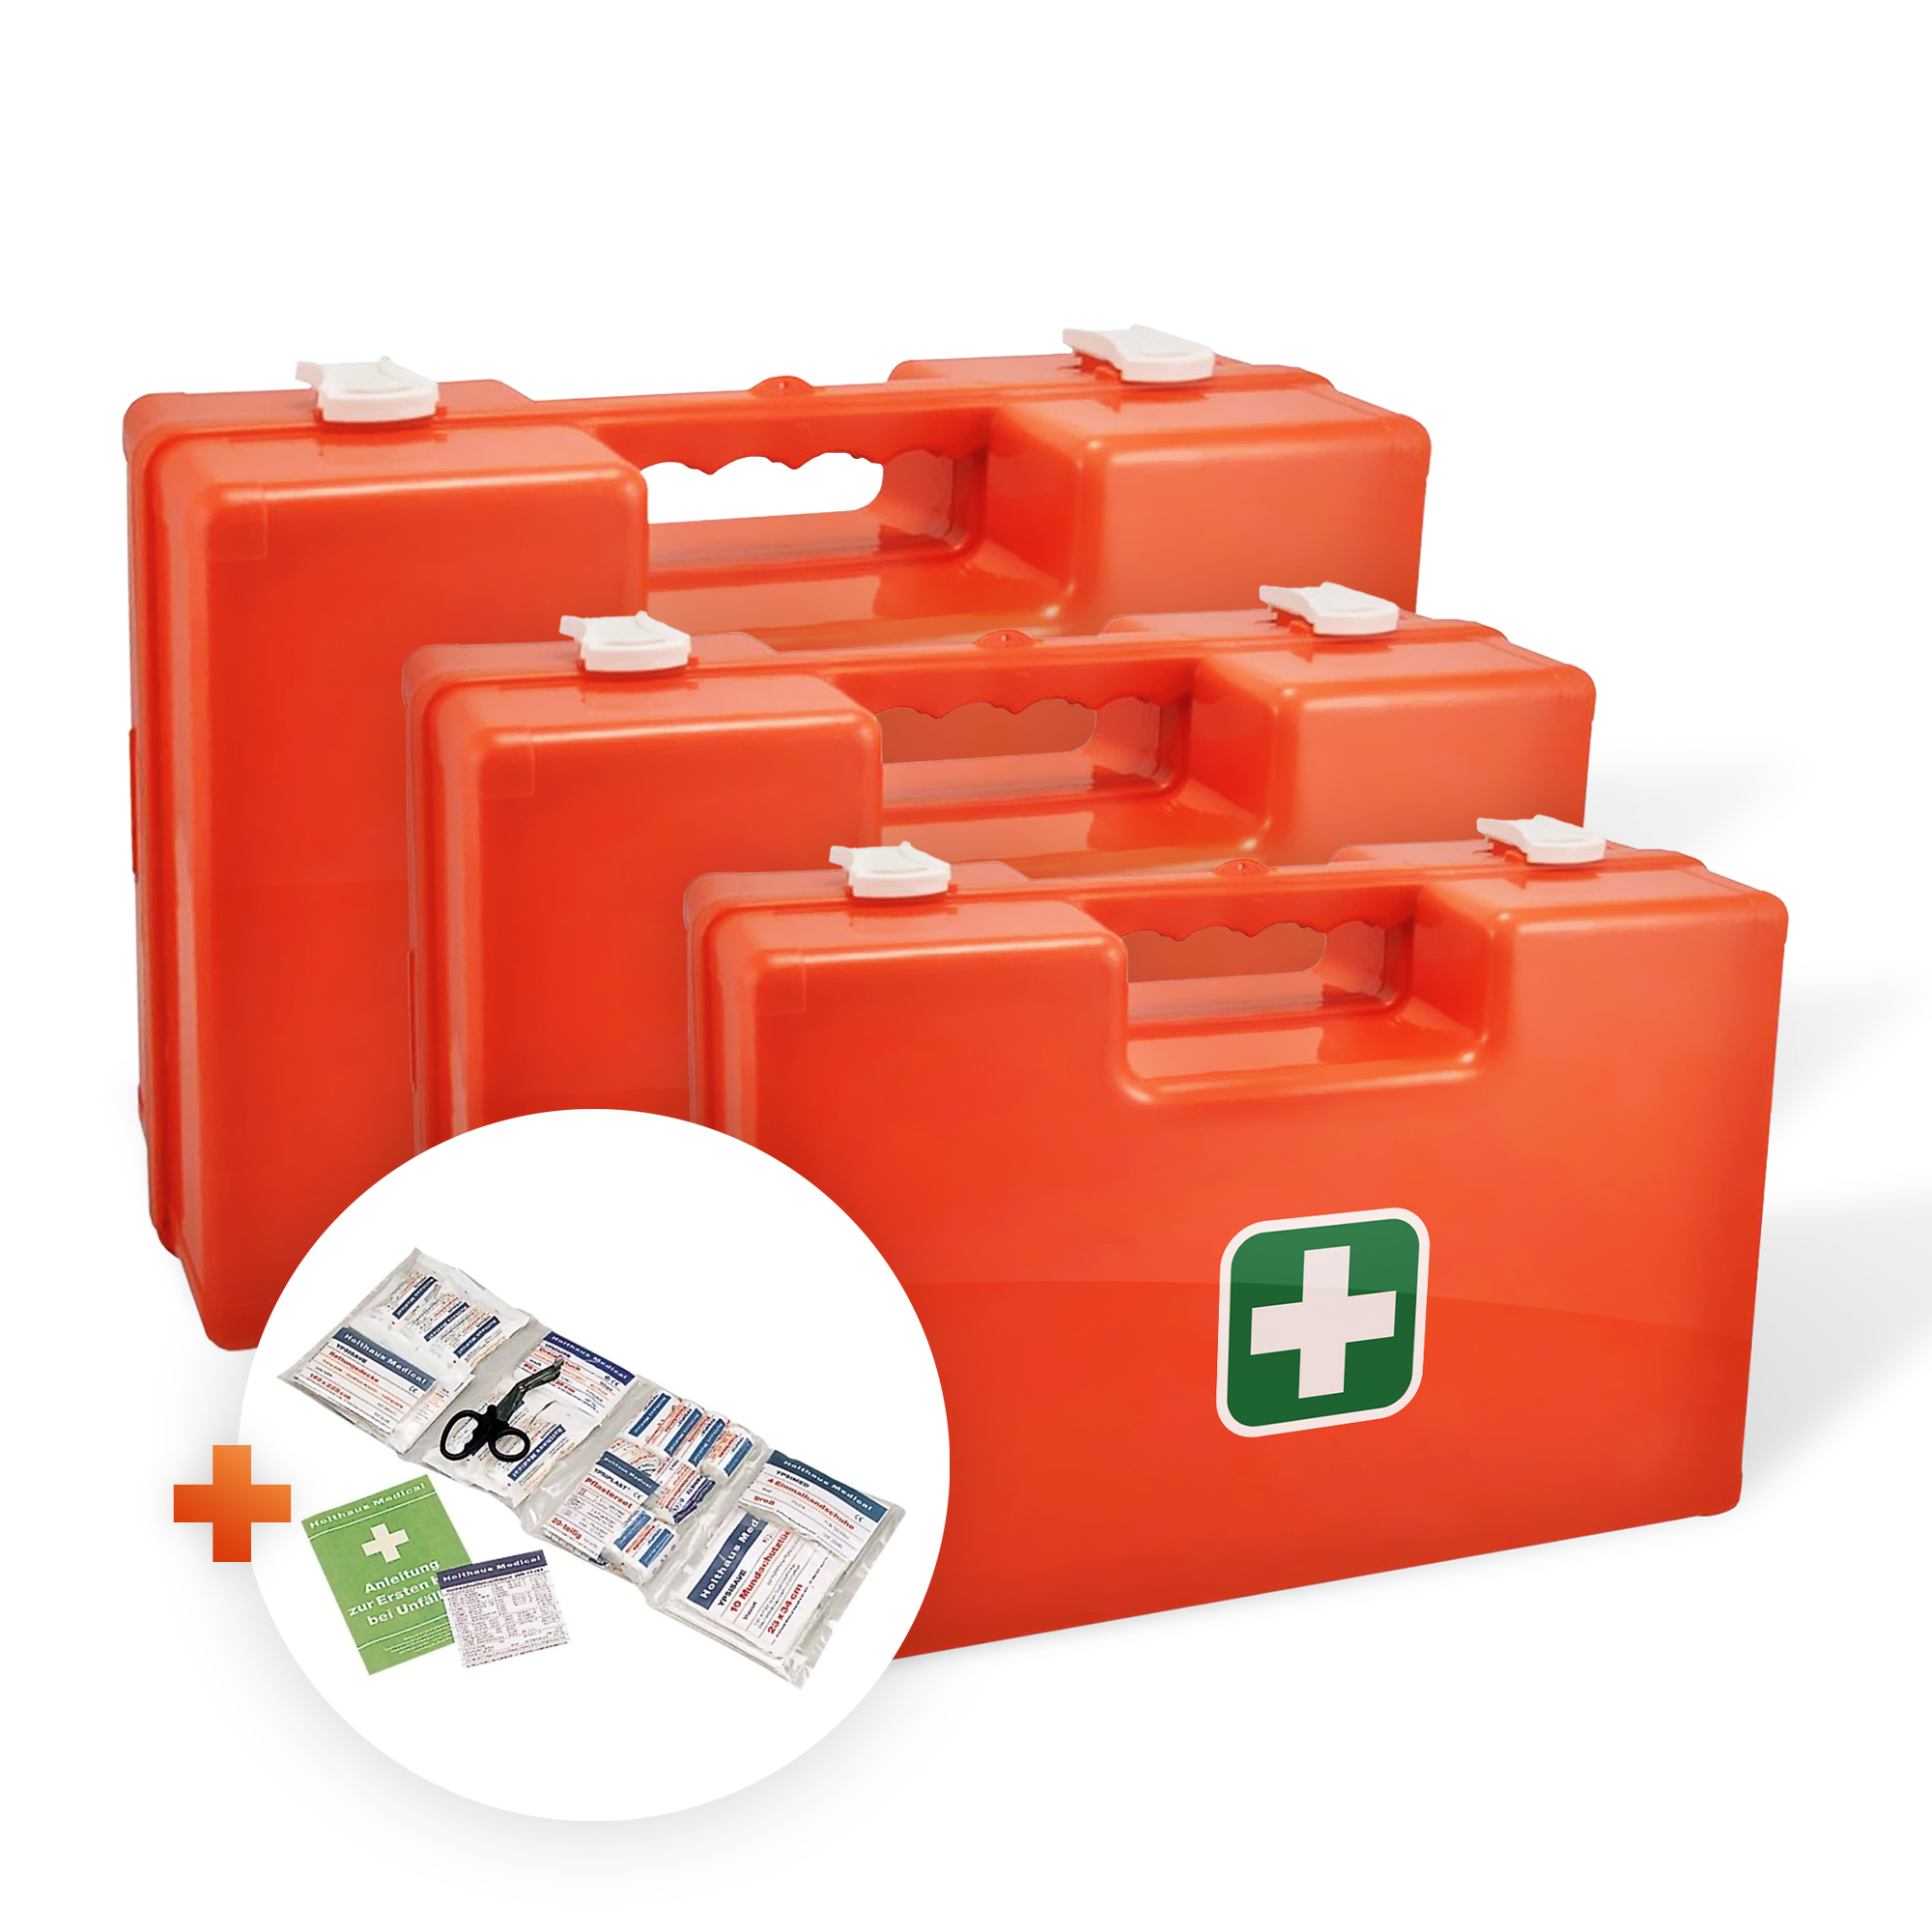 Holthaus Medical filling range first aid kit DIN 13169